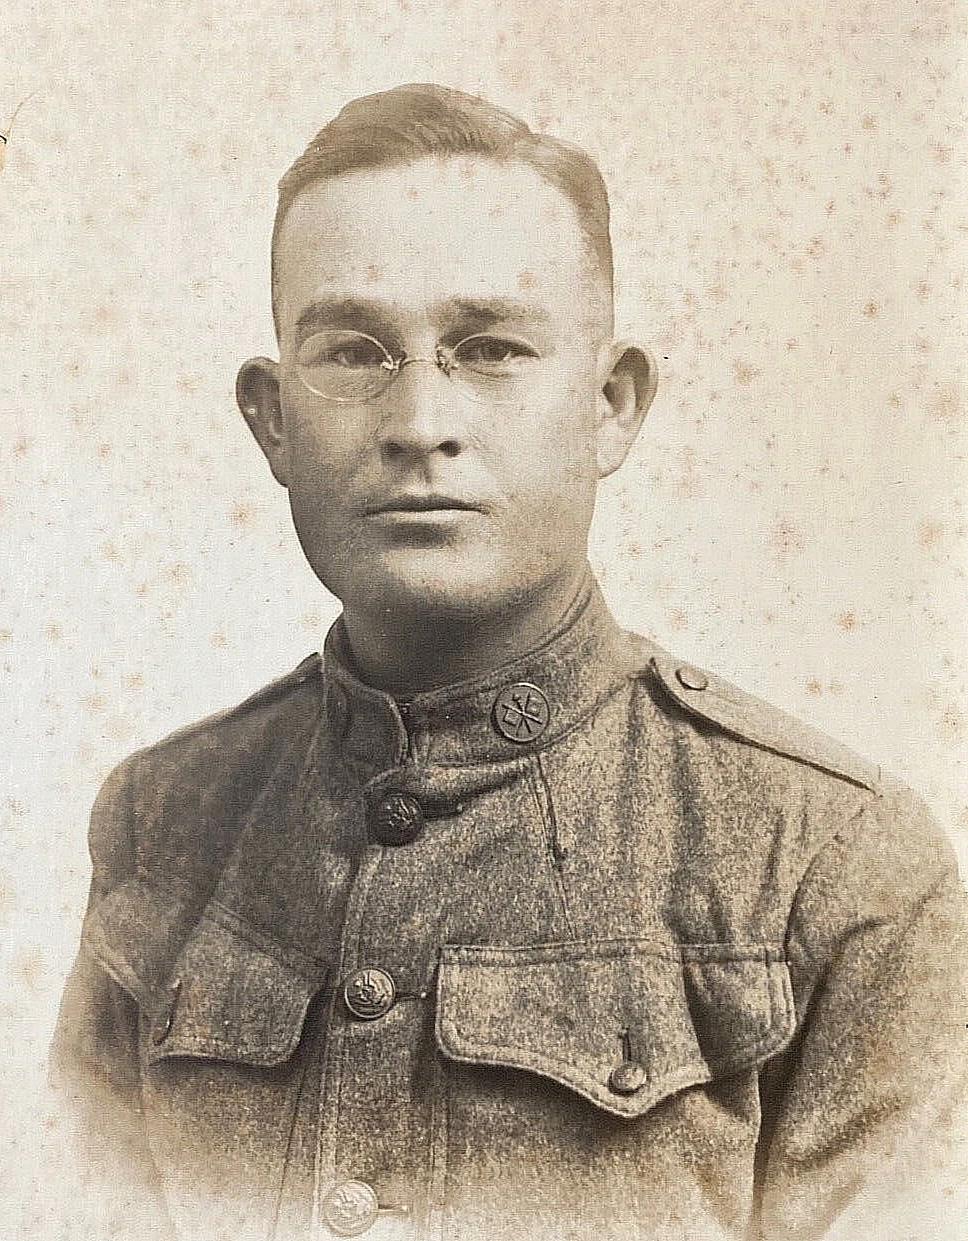 ORIGINAL WW1 U.S. ARMY SIGNAL CORPS SOLDIER 1917 ID'd PHOTOGRAPH